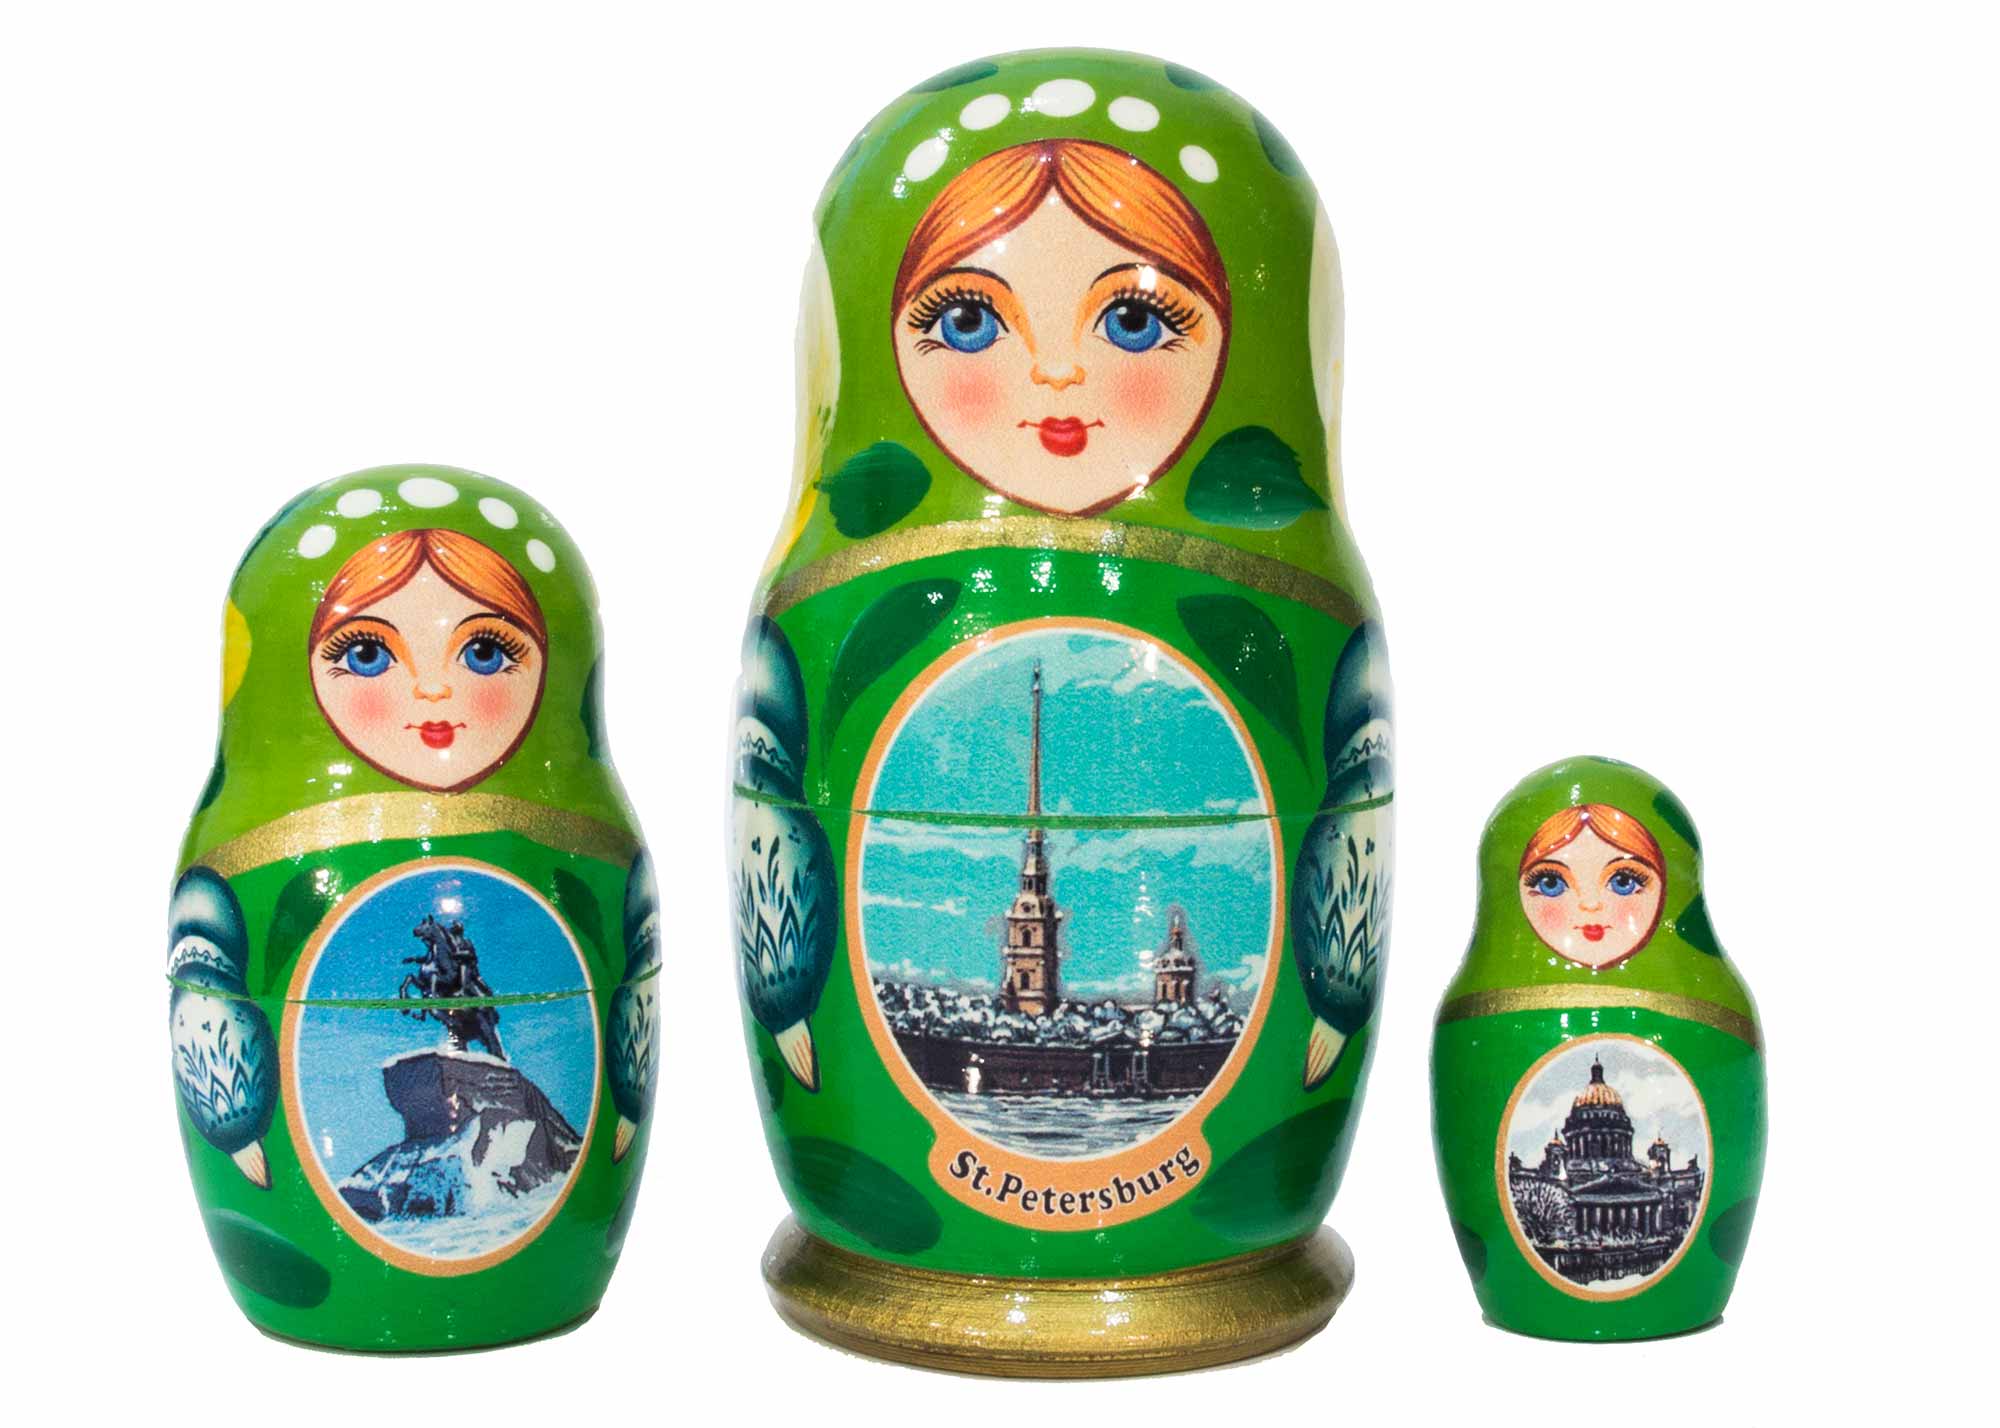 Buy Saint Petersburg Nesting Doll 3pc./4" - Green at GoldenCockerel.com